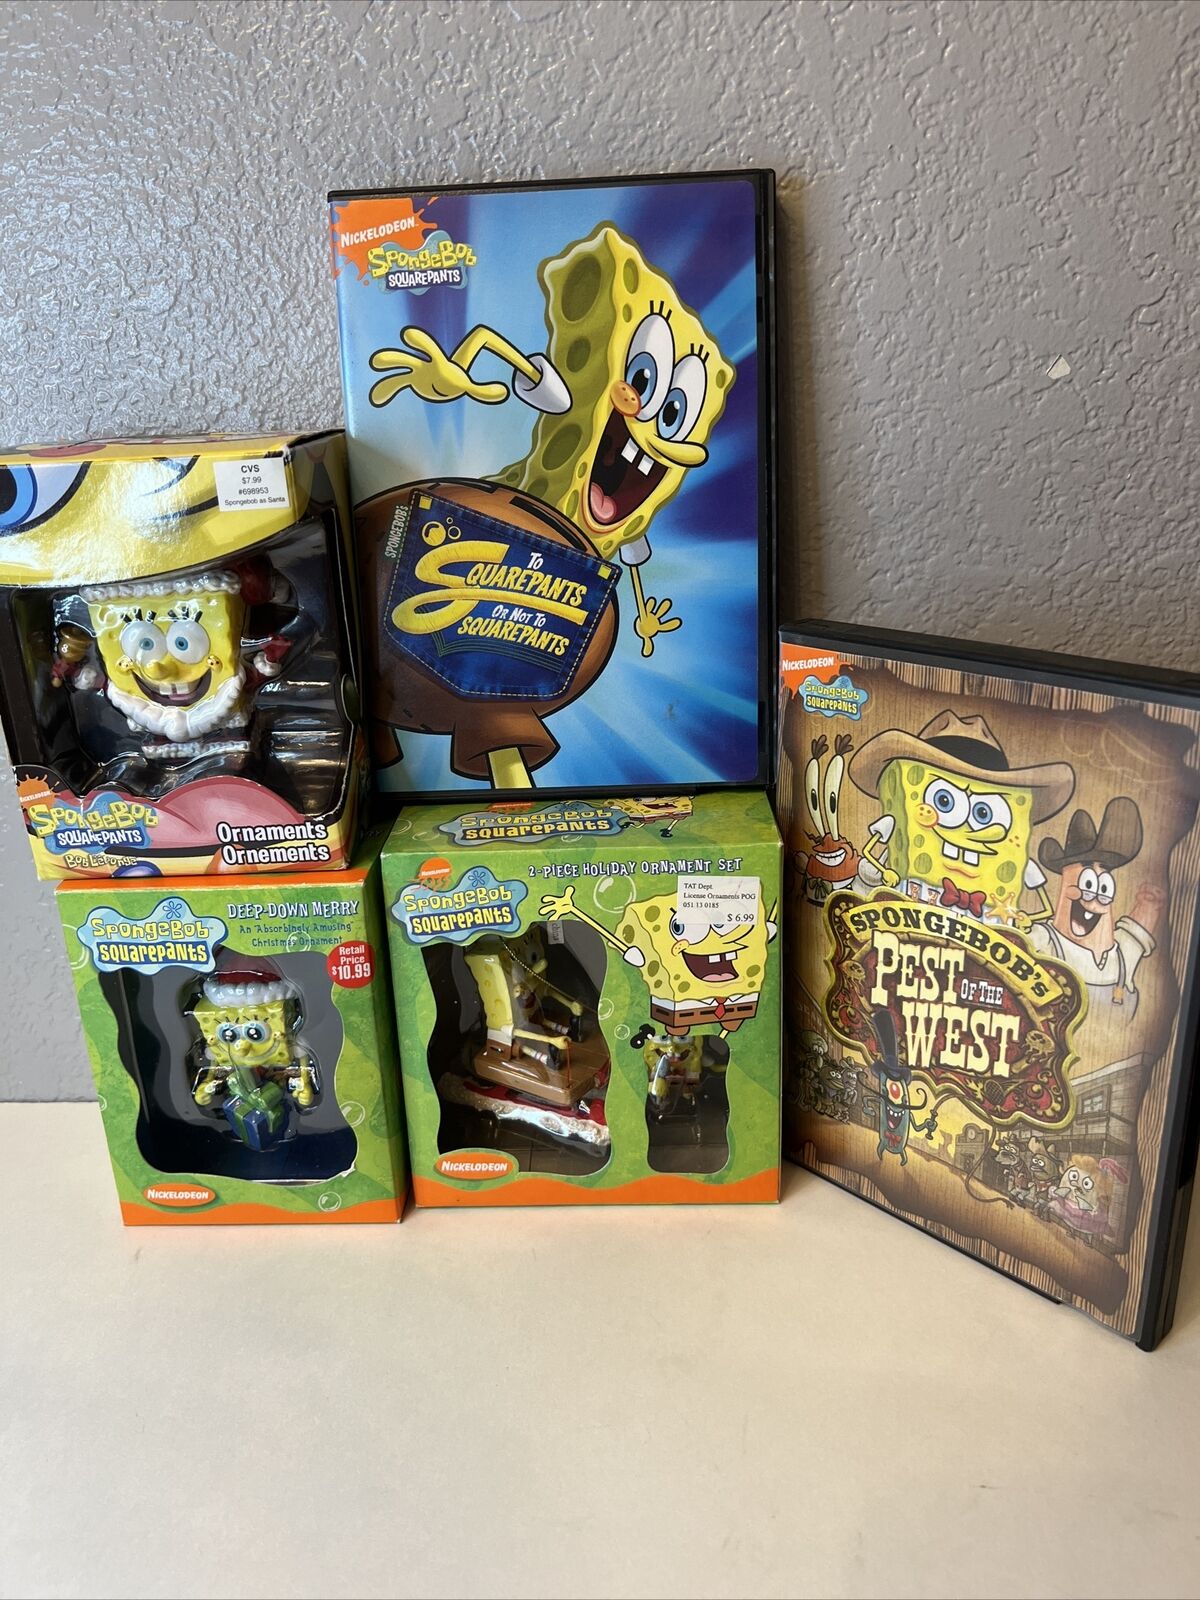 Vintage Nickelodeon’s Sponge Bob Squarepants Ornaments Lot Of 3 And 2 DVDs